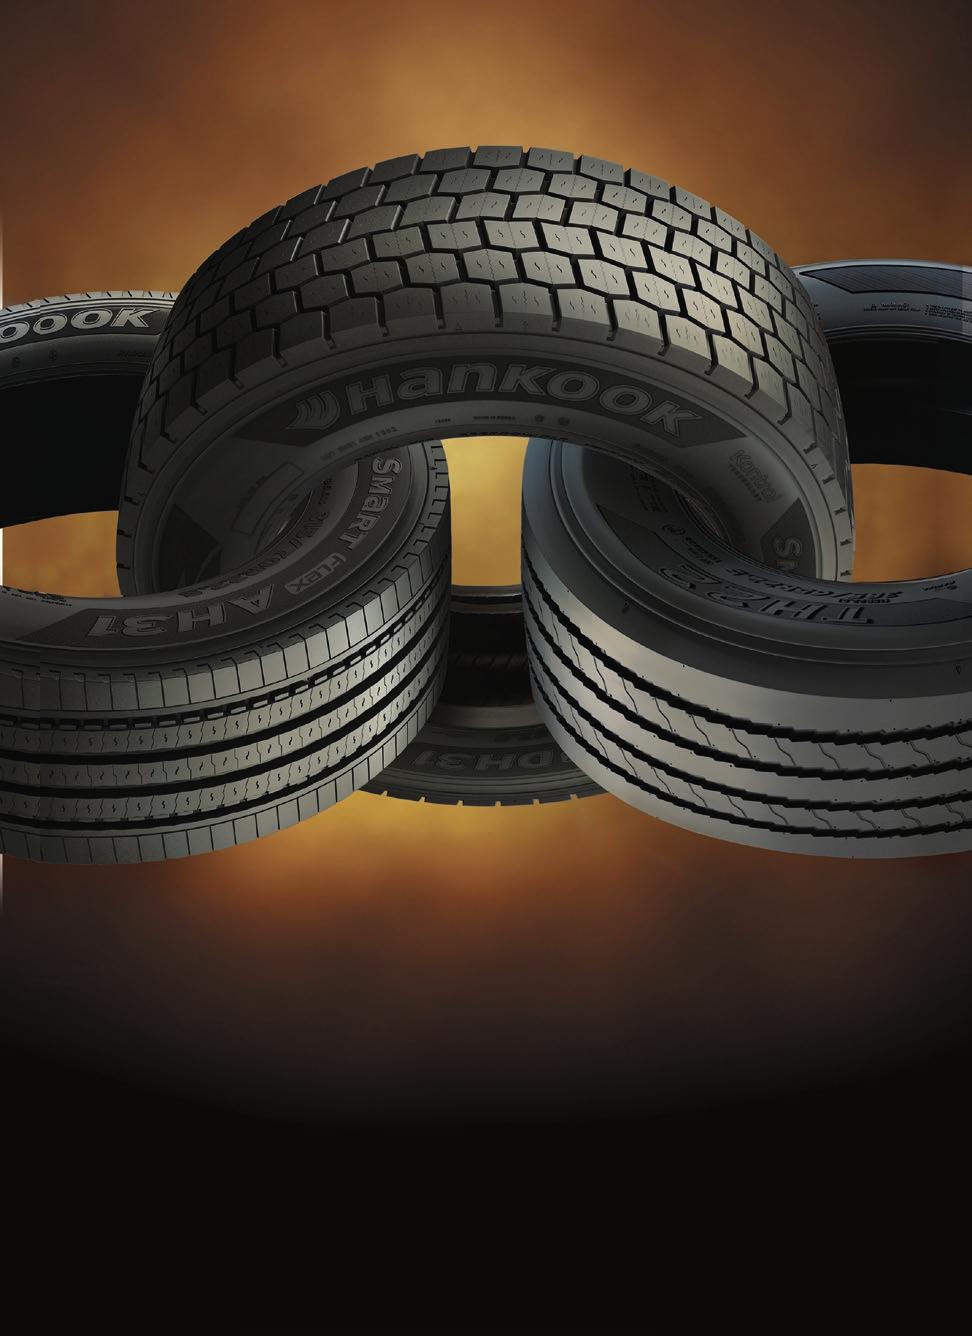 work. All season steer axle tyre for variable road conditions All season drive axle tyre for